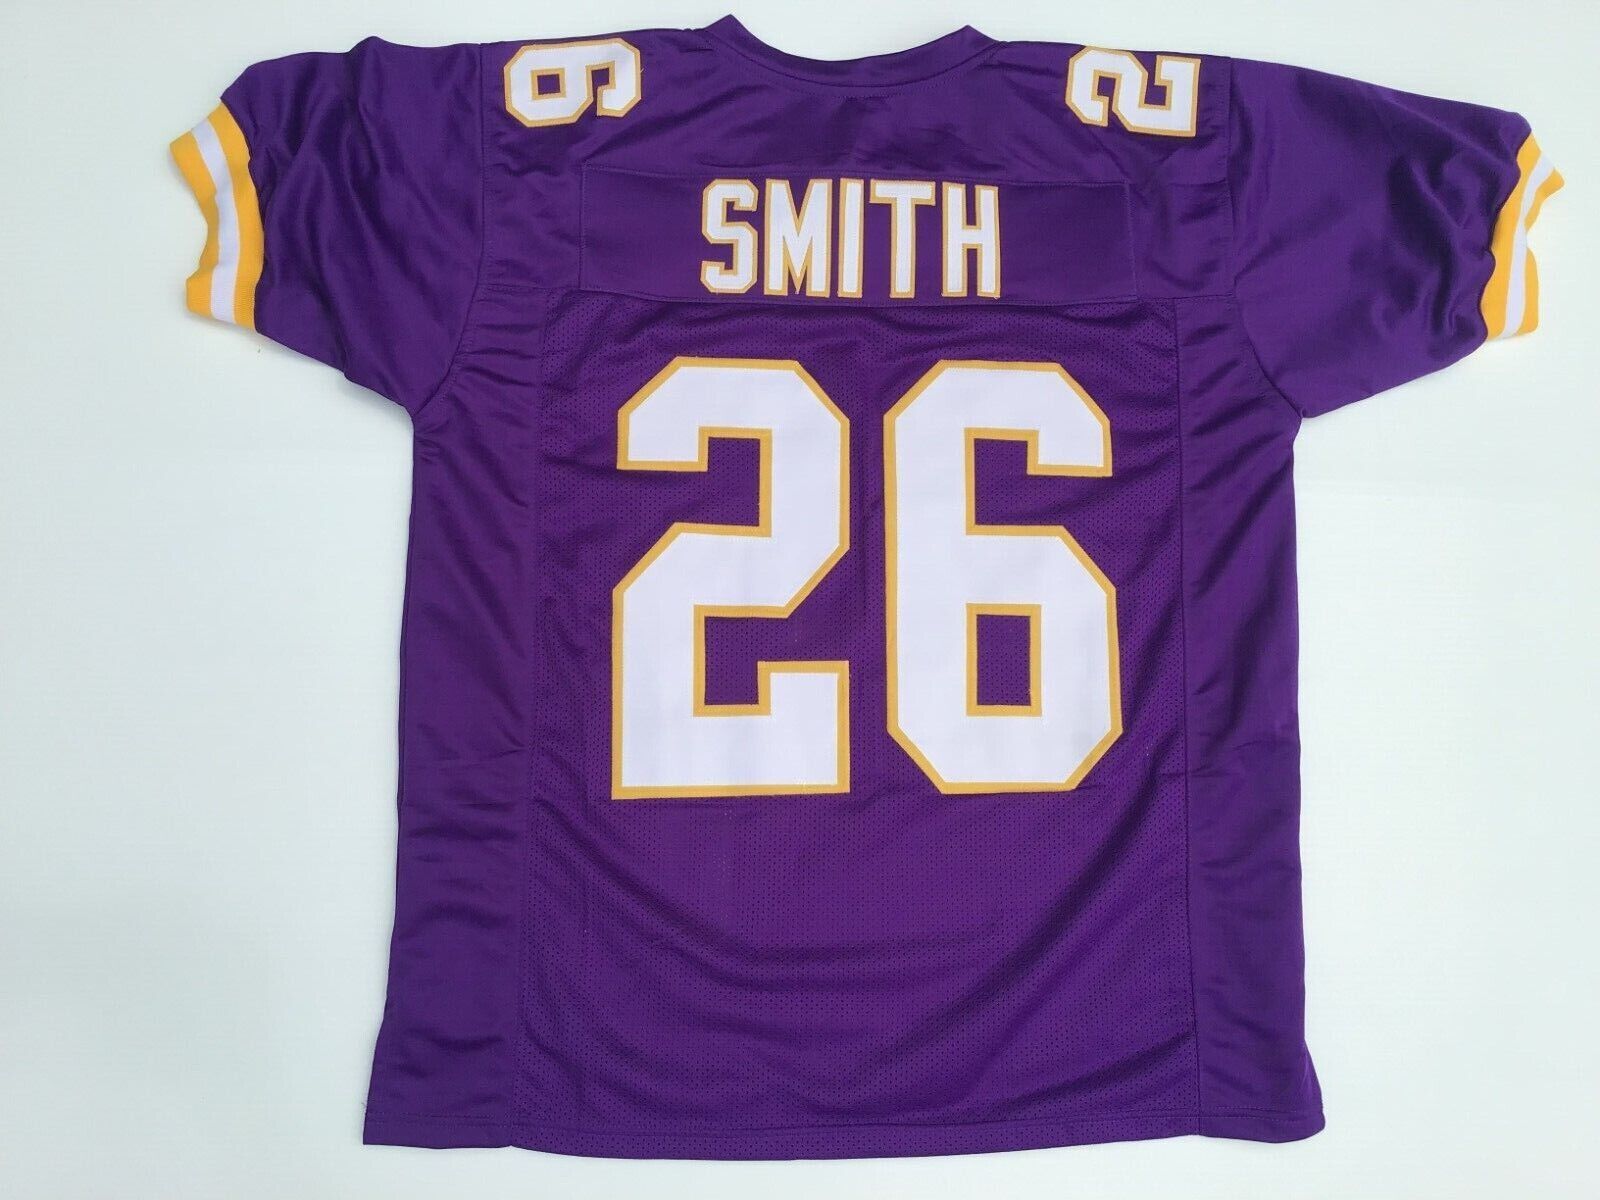 UNSIGNED CUSTOM Sewn Stitched Robert Smith Purple Jersey - M, L, XL, 2XL